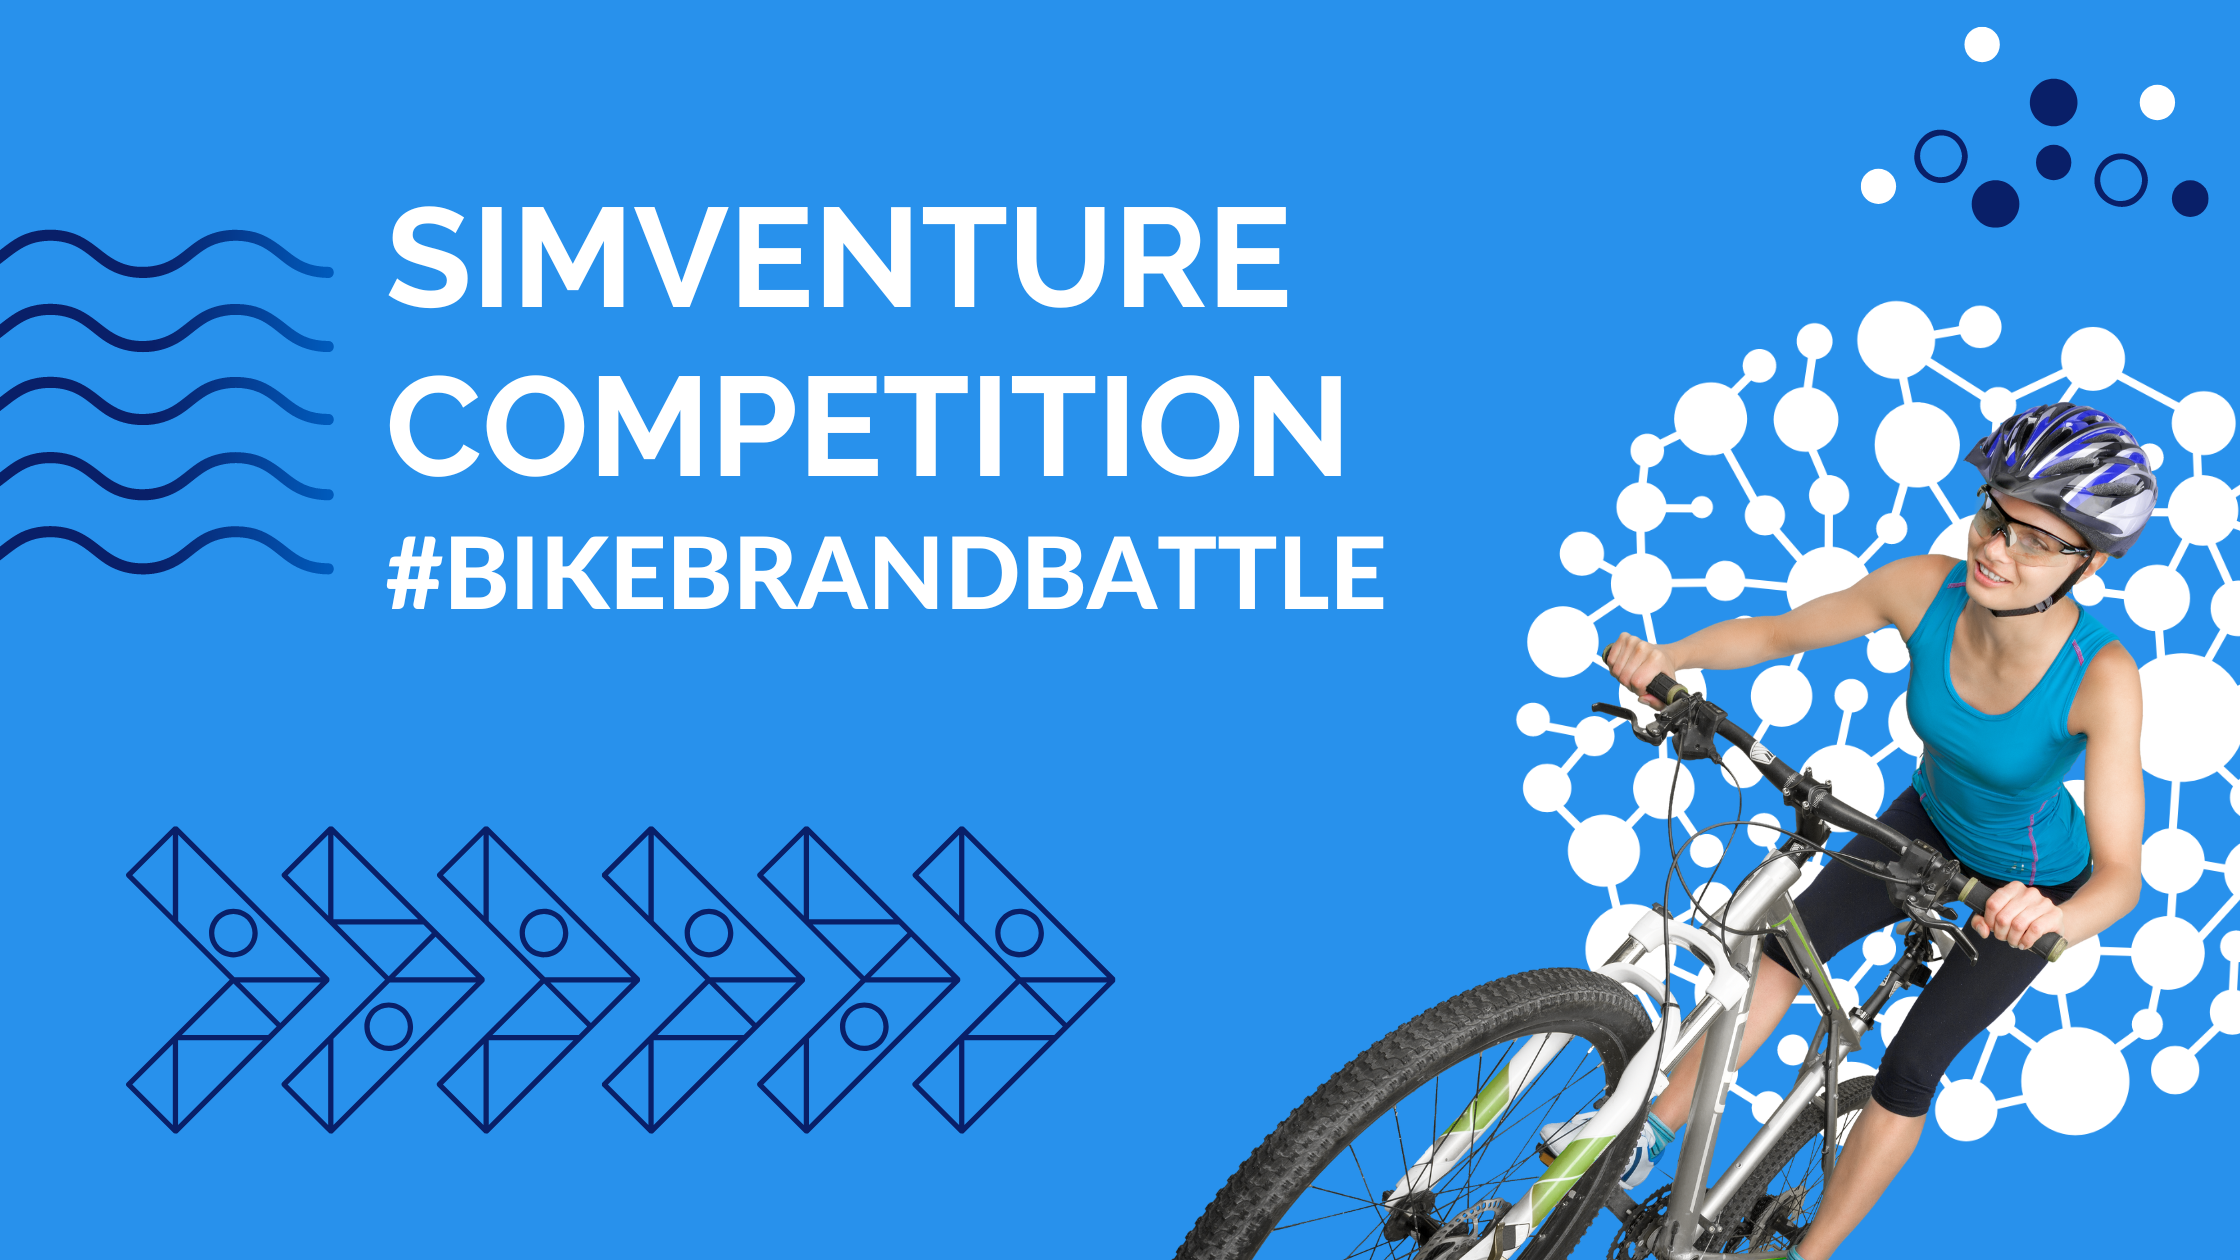 #BikeBrandBattle - enter our October 2022 social media competition for users of our online business simulation, SimVenture Evolution.